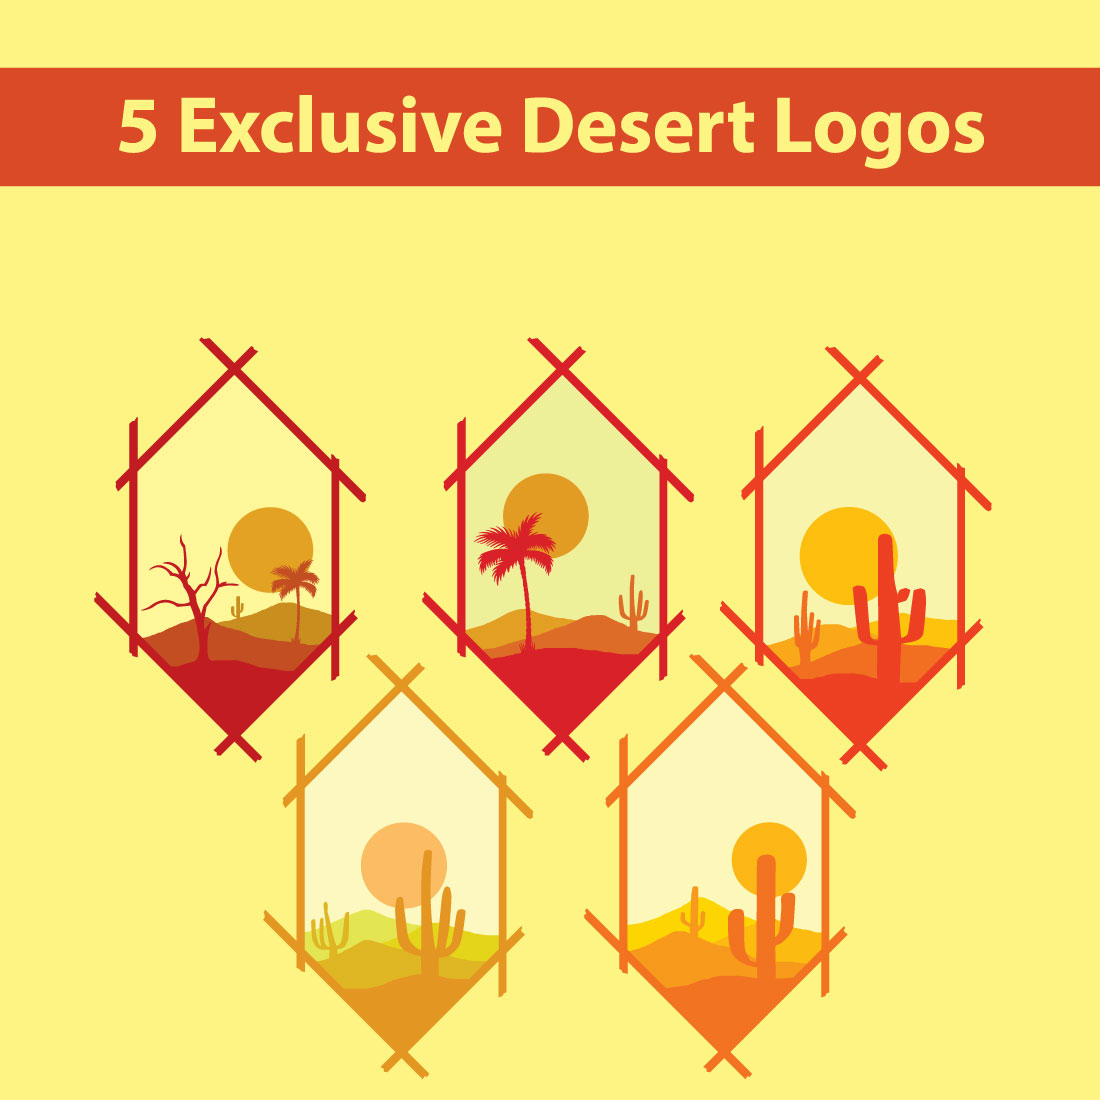 5 Exclusive Desert Logos cover image.